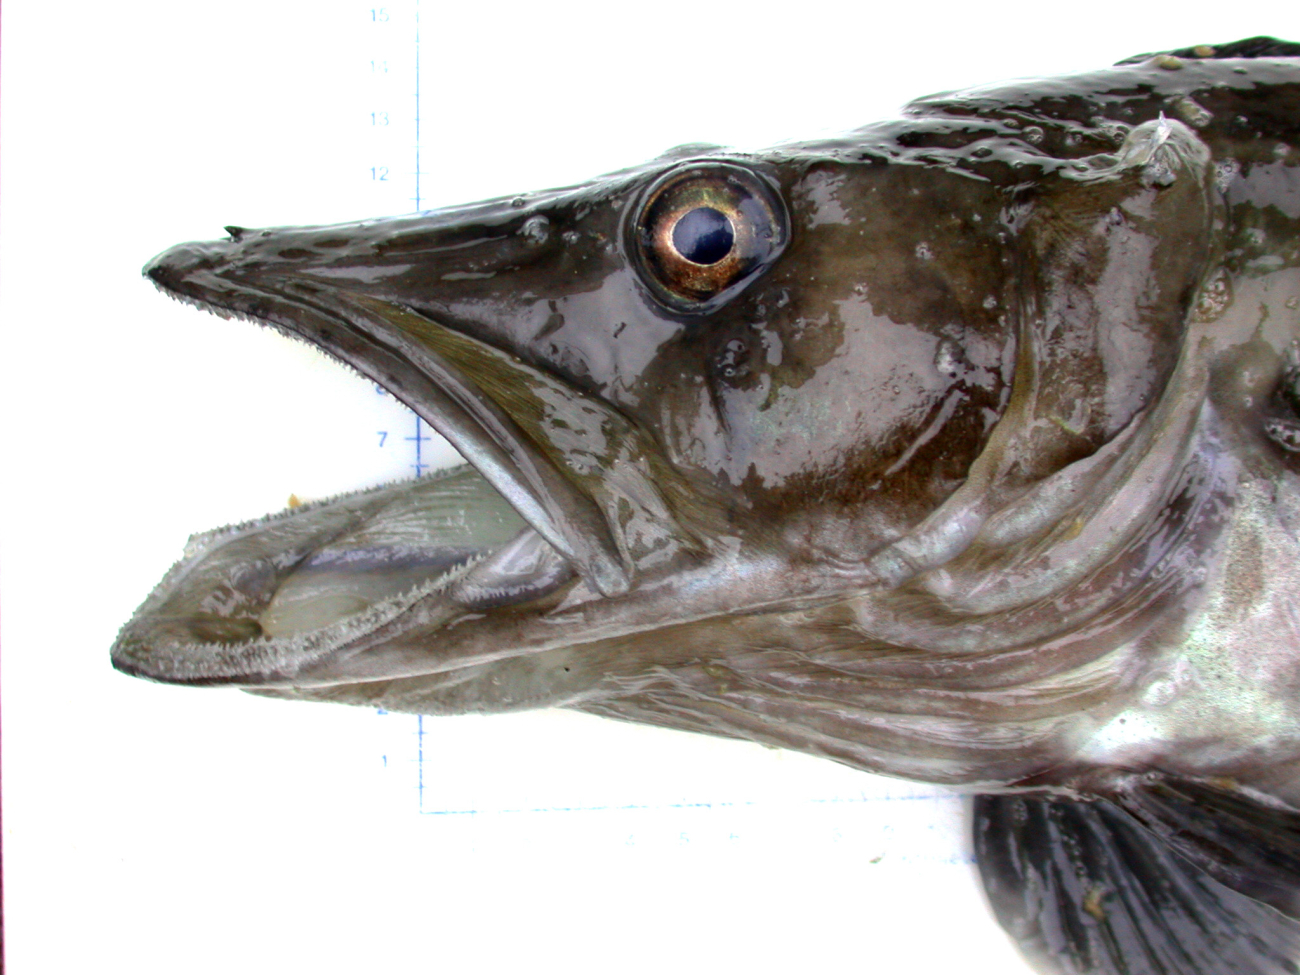 Pseudochannichthys georgianus, a species of Antarctic icefish